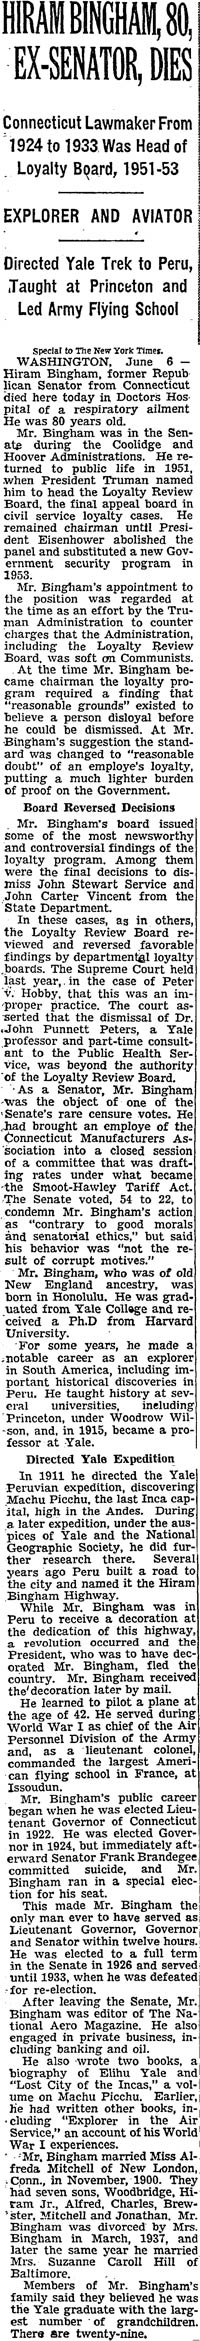 Hiram Bingham, Obituary, June 6, 1956 (Source: NYT)